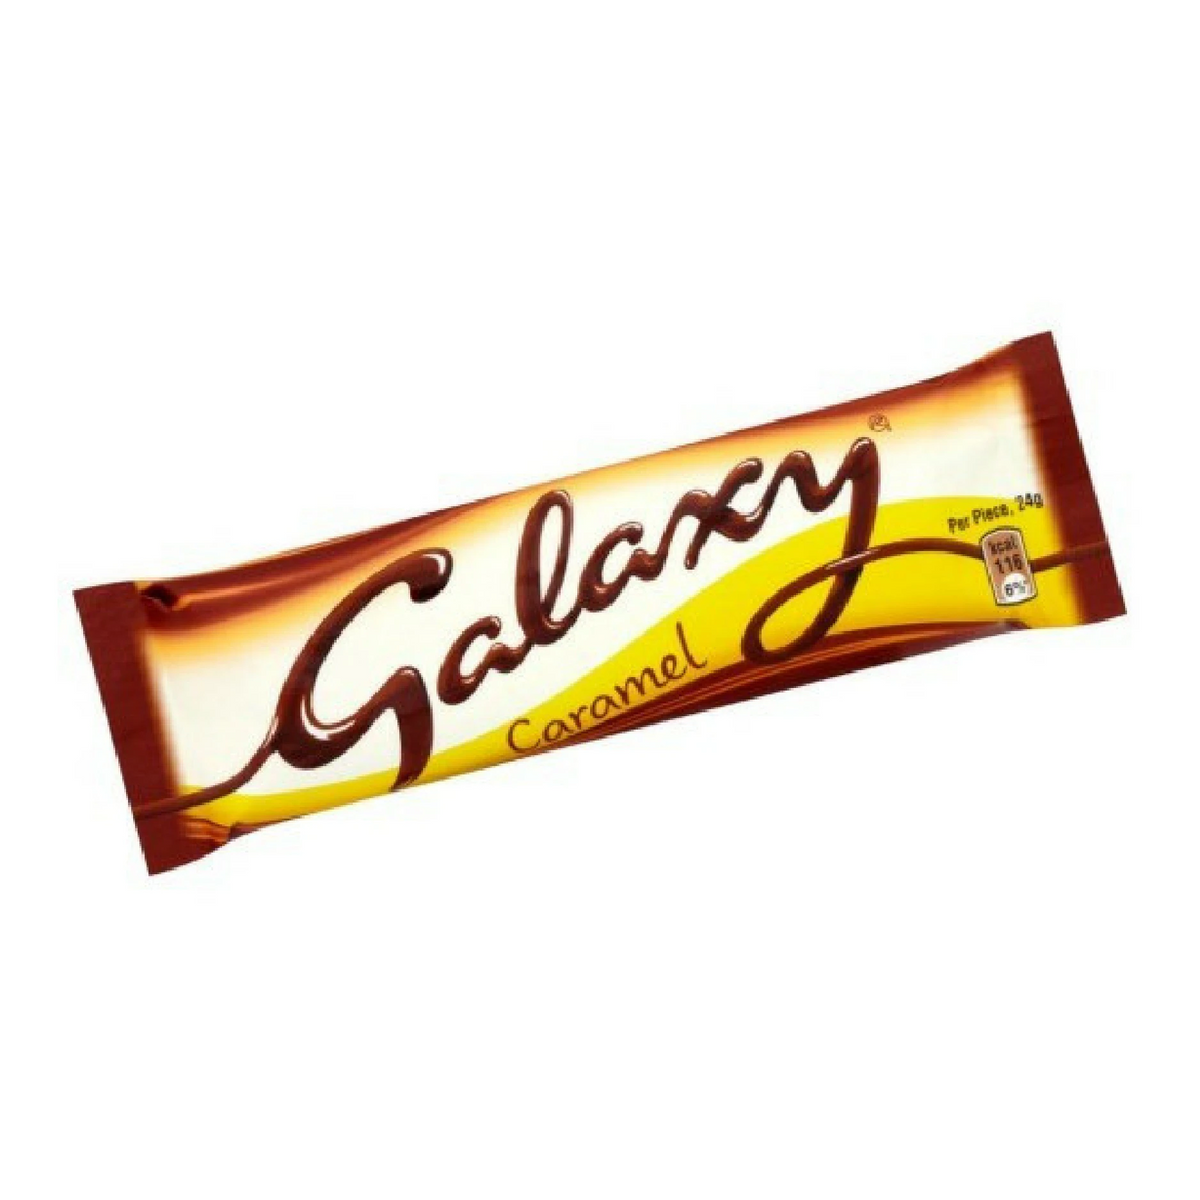 Galaxy Smooth Caramel Chocolate Bar - Chocolate